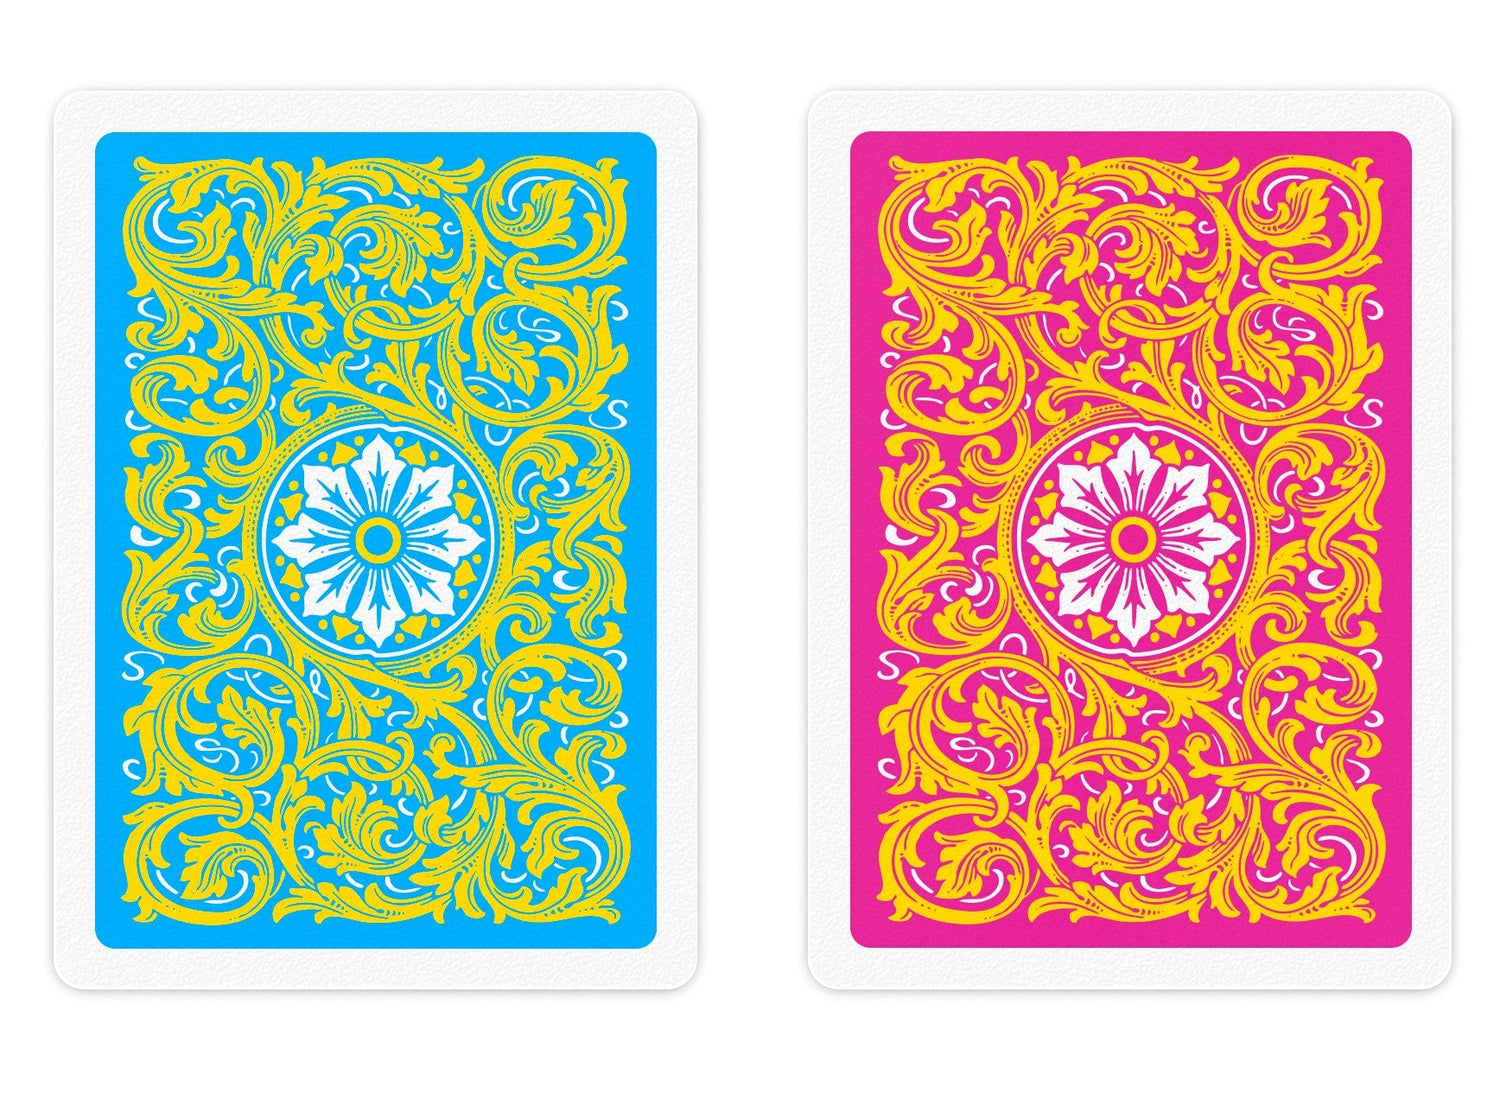 Copag 100% Plastic Playing Cards - Poker Size Jumbo Index 2-Decks Set